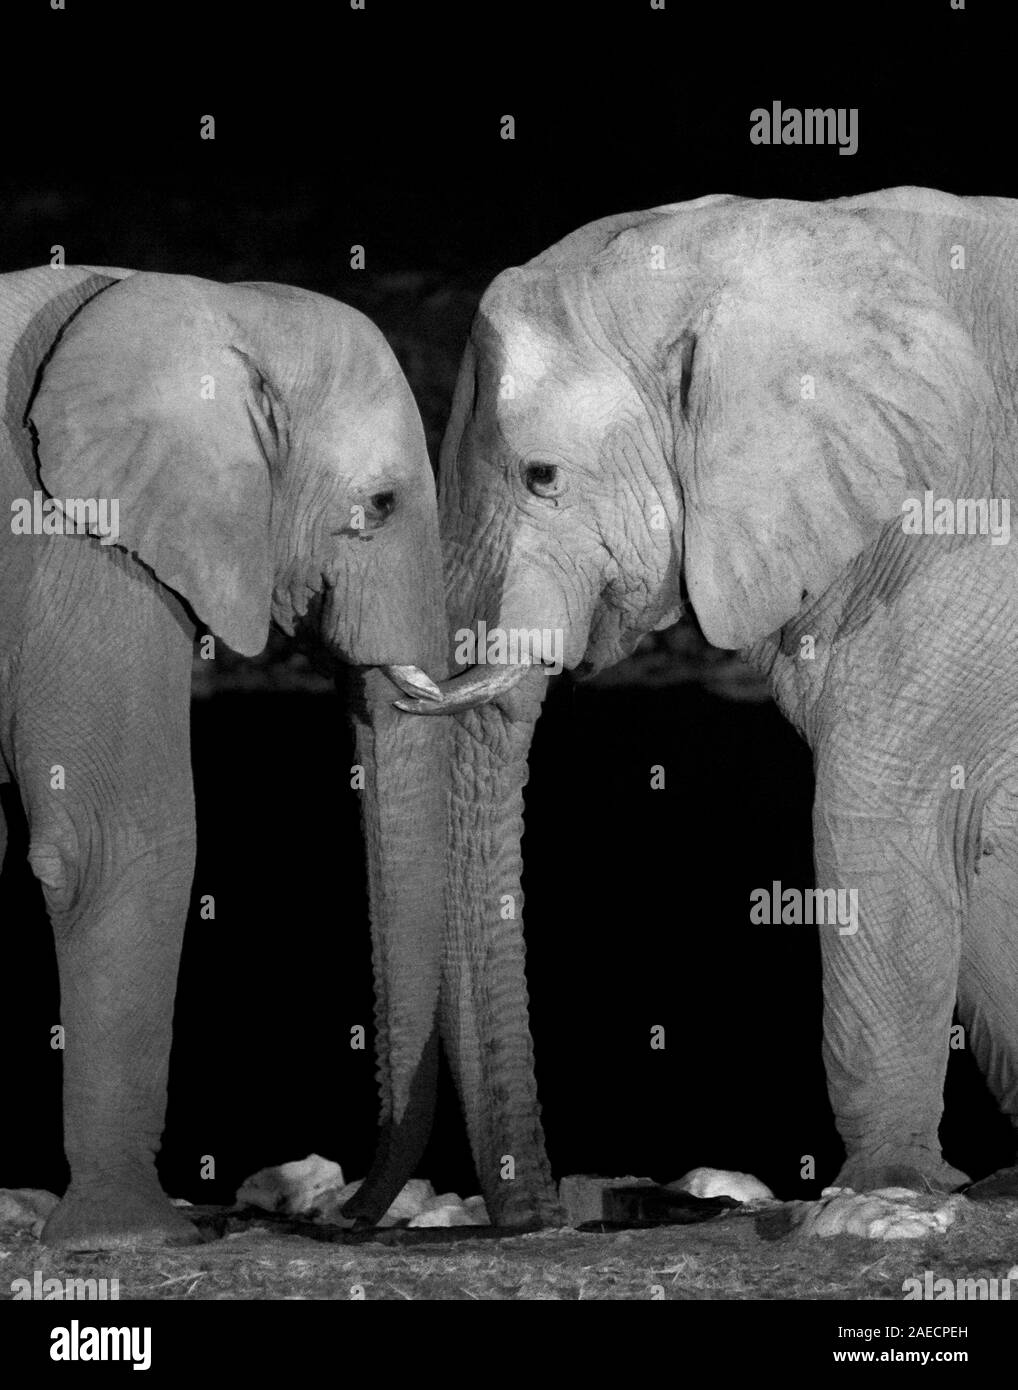 ELEPHANTS IN NAMIBIA Stock Photo